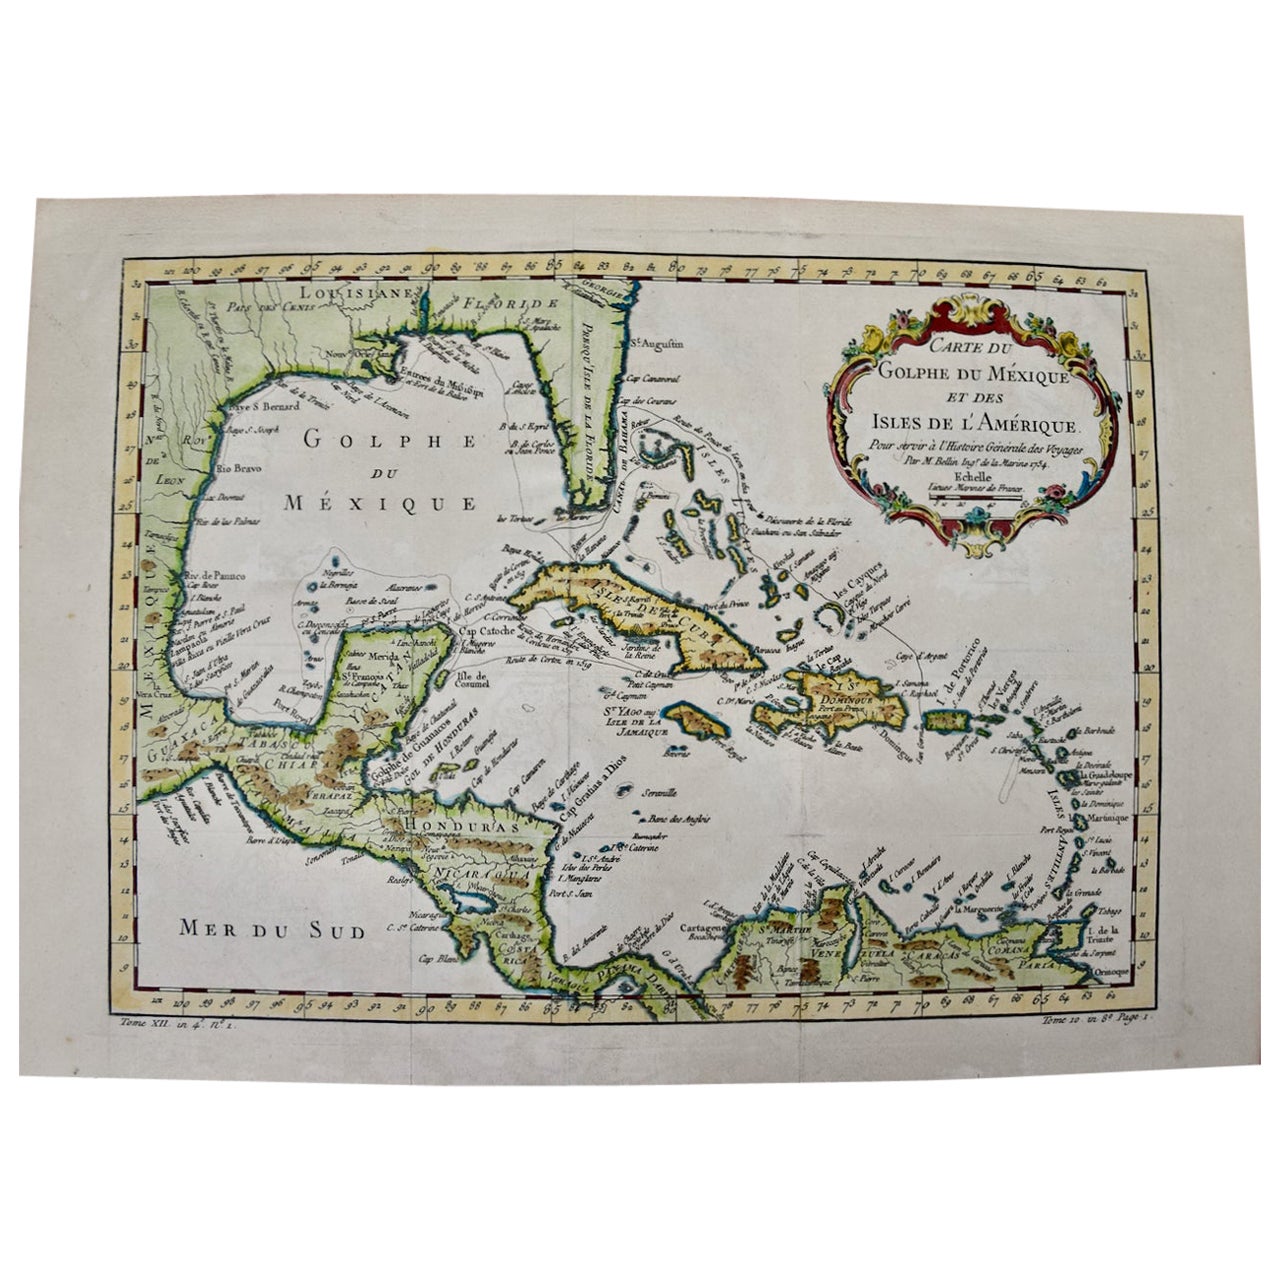 Gulf of Mexico, Florida, C. America, Cuba, etc.: 18th C. Hand-colored Bellin Map